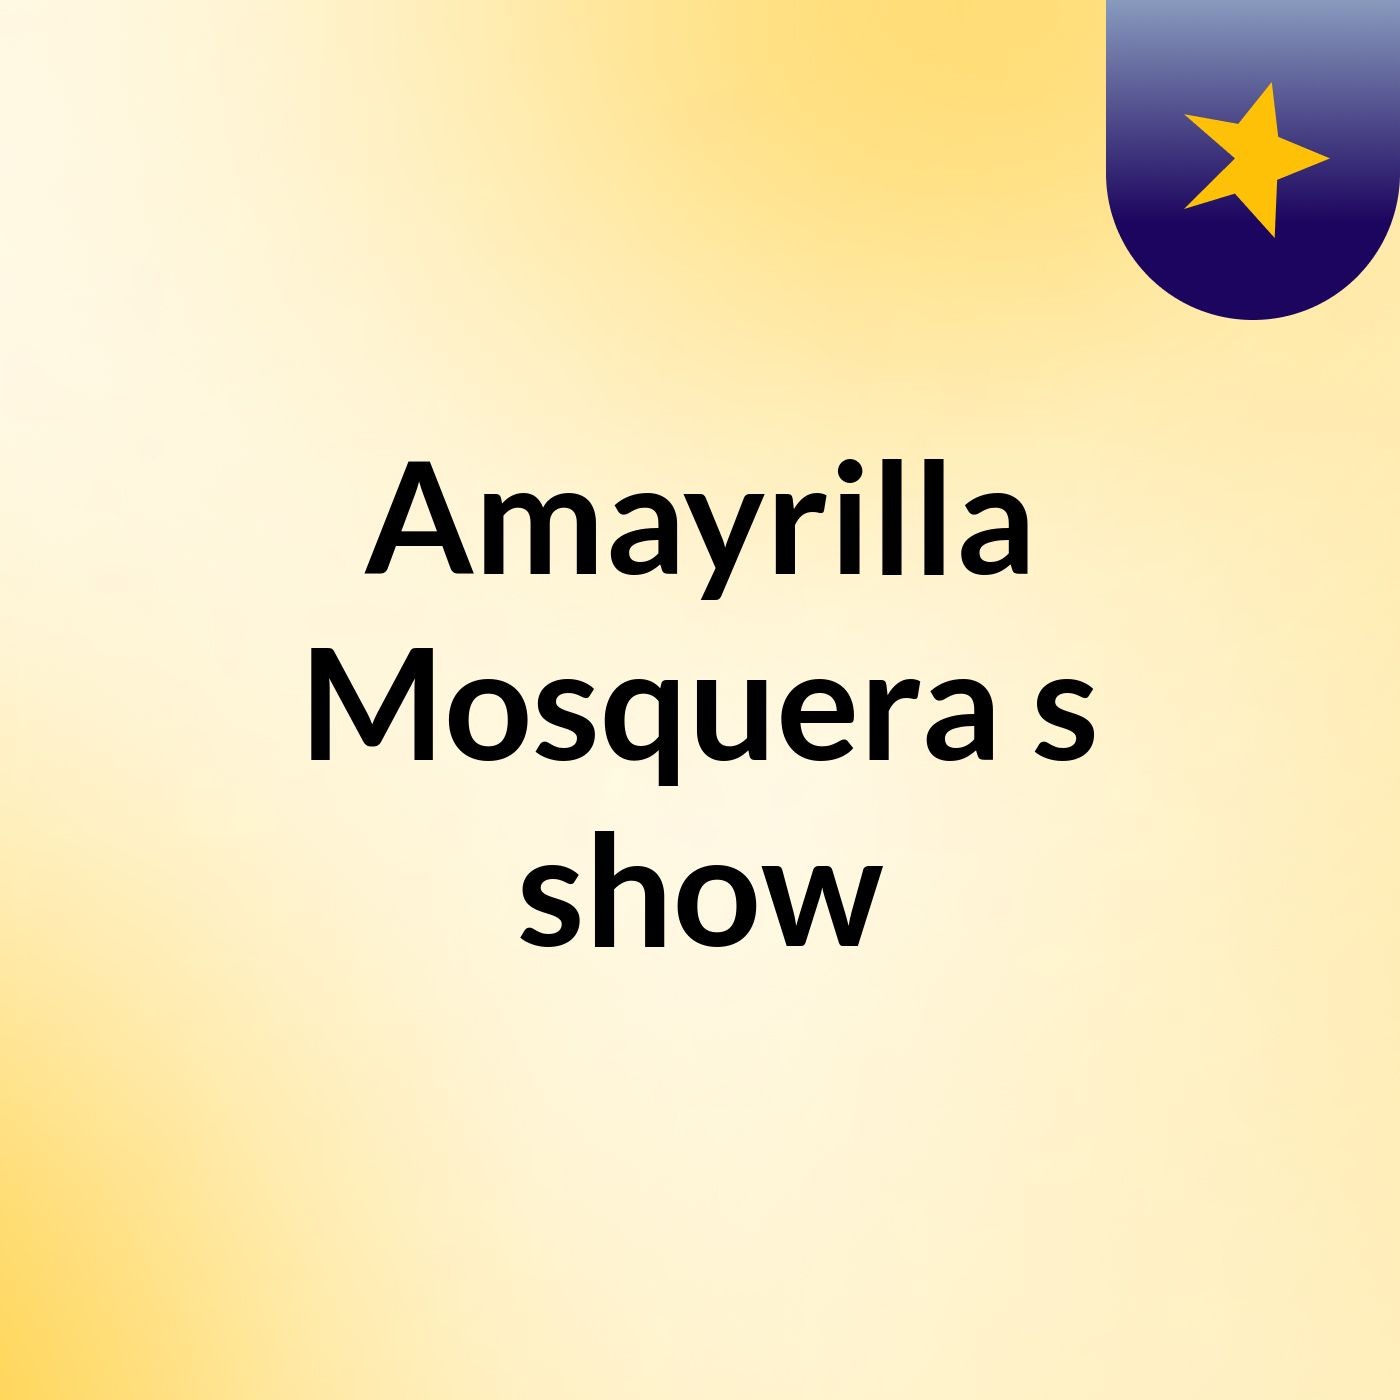 Amayrilla Mosquera's show